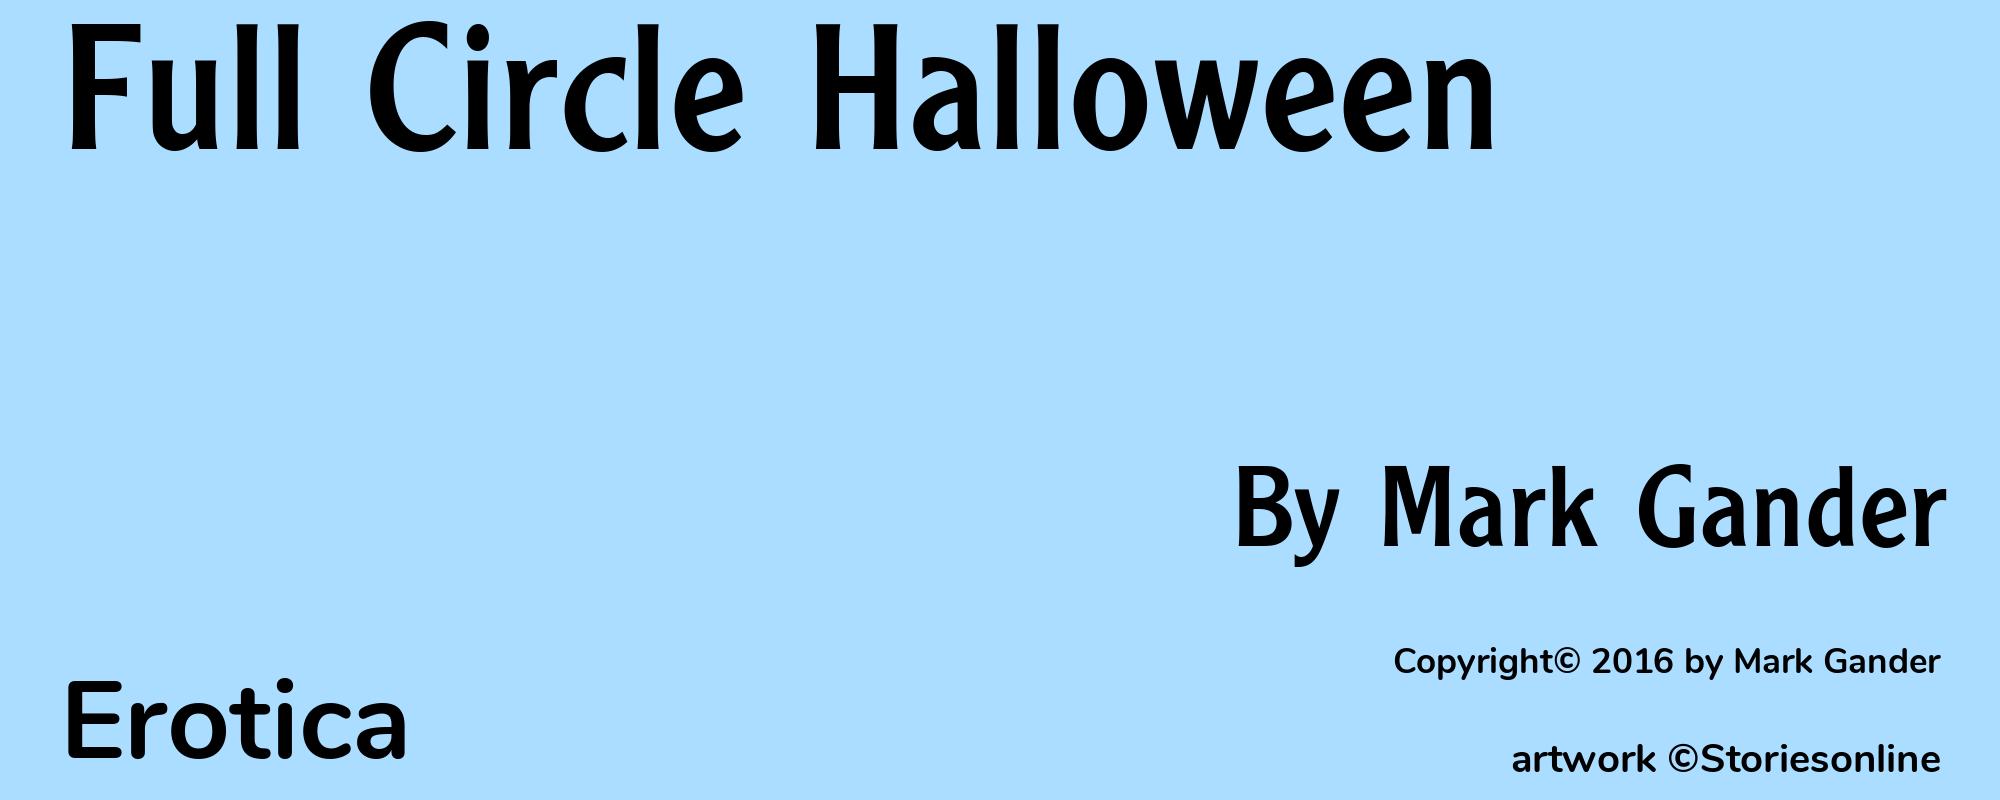 Full Circle Halloween - Cover